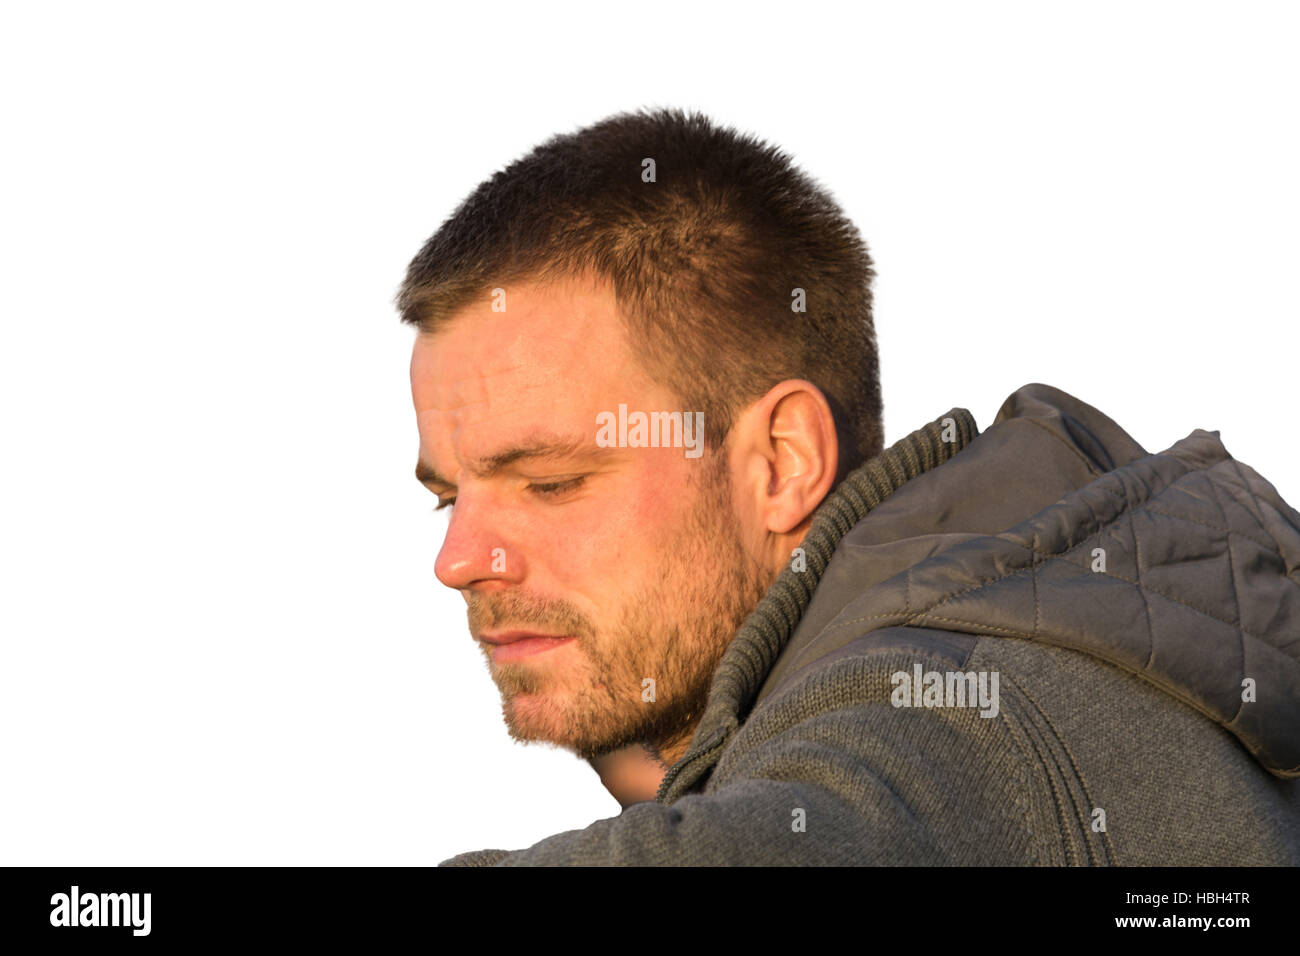 Men Portrait against white background. Stock Photo